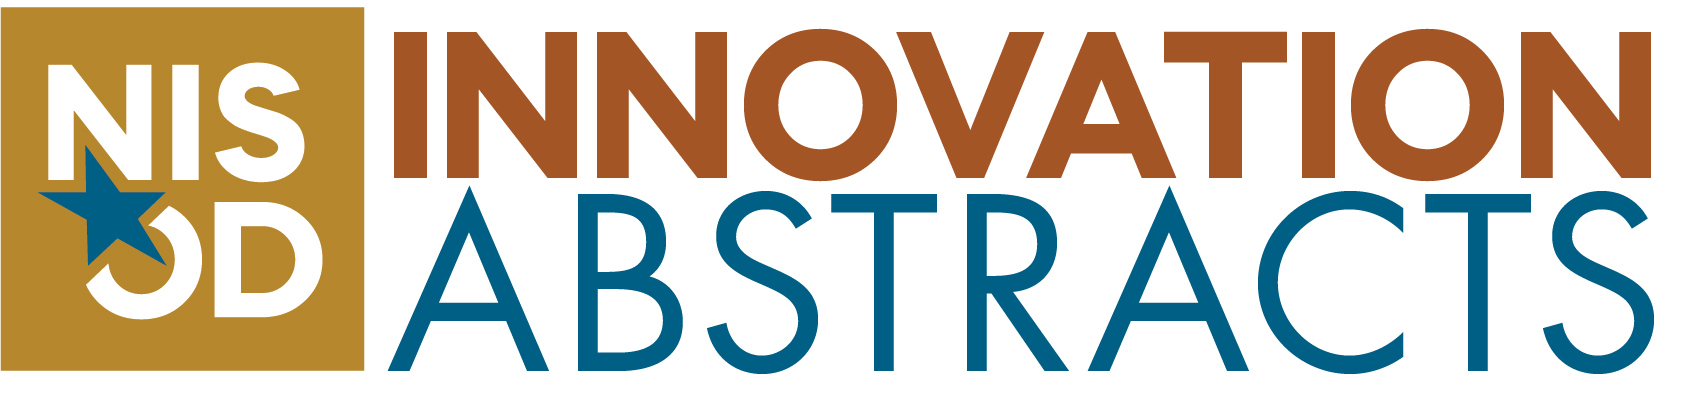 NISO Innovation Abstracts Logo HORIZ